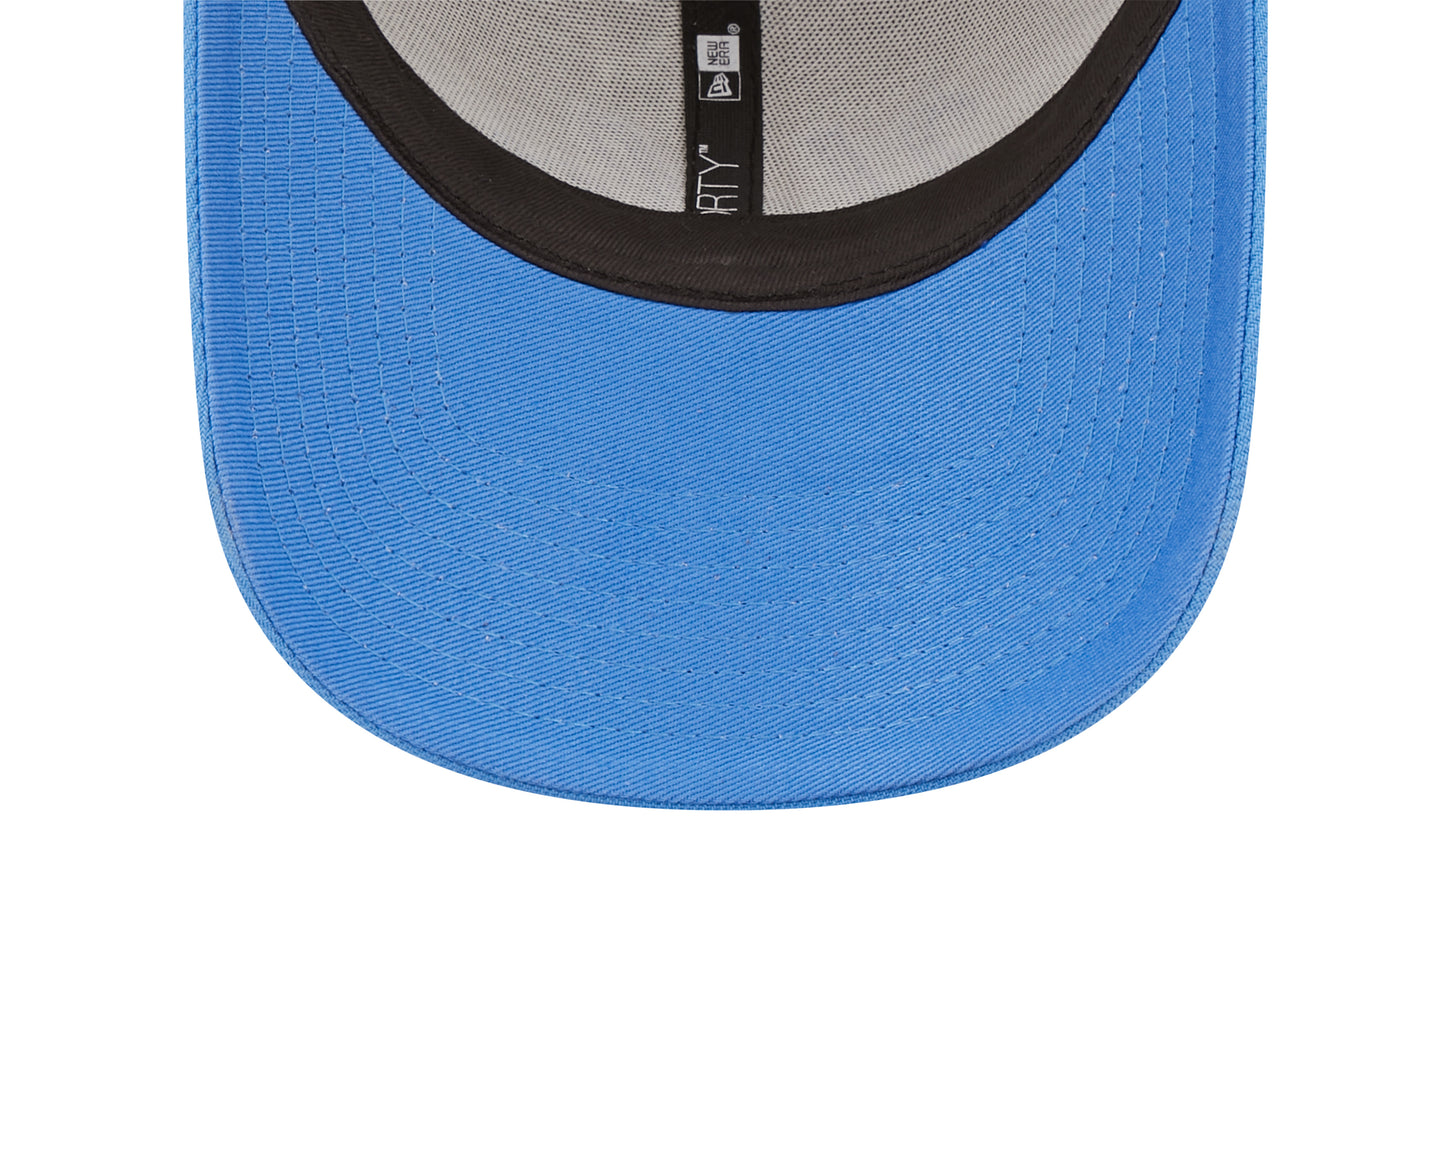 North Carolina Tar Heels 2 Tone Gray/ Sky Blue NCAA New Era The League 9Forty Adjustable Hat